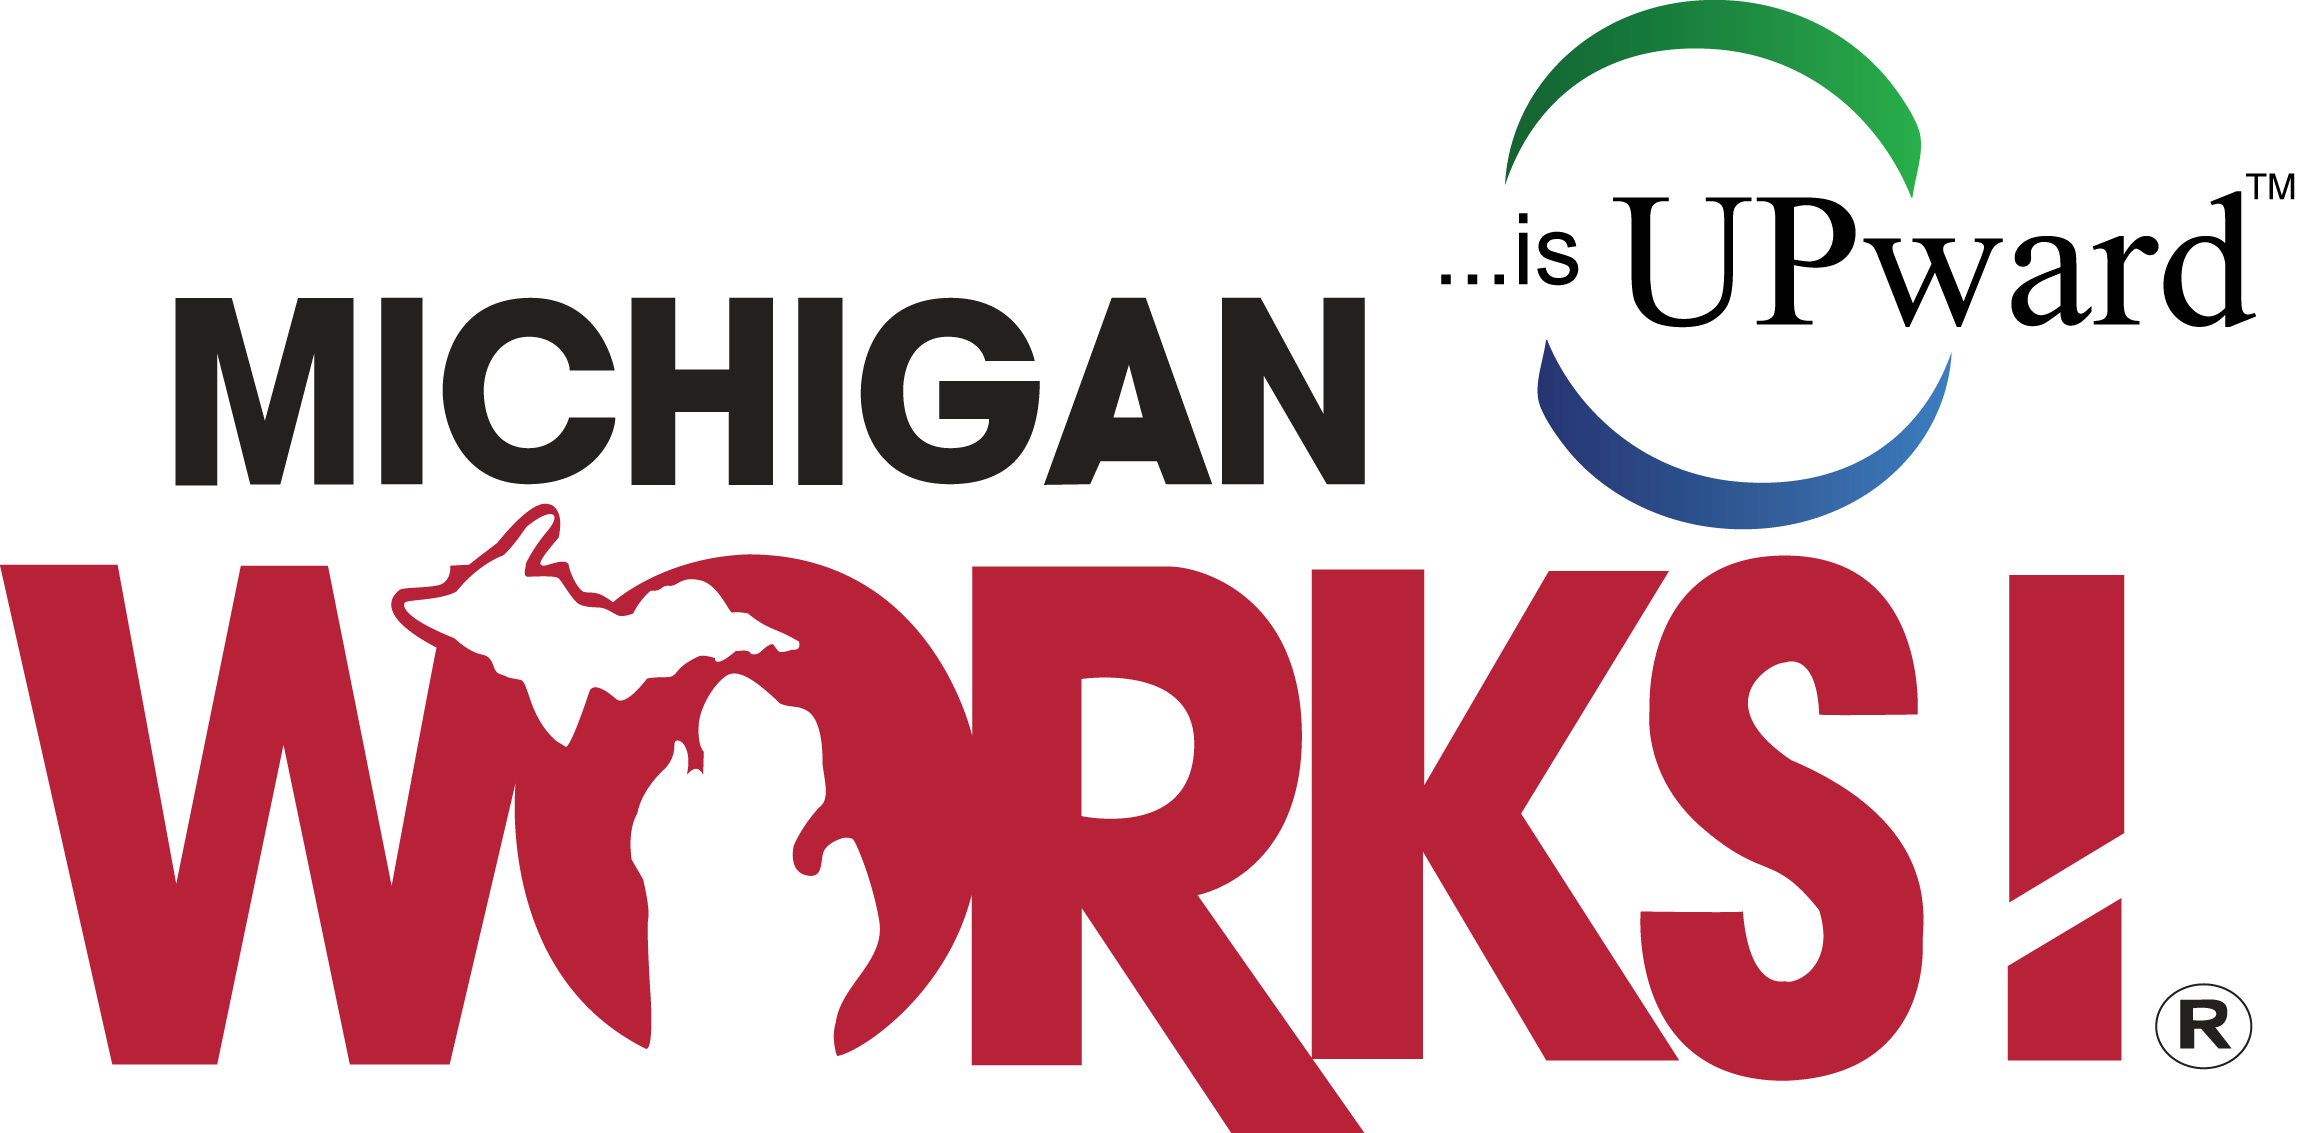 Michigan Works!